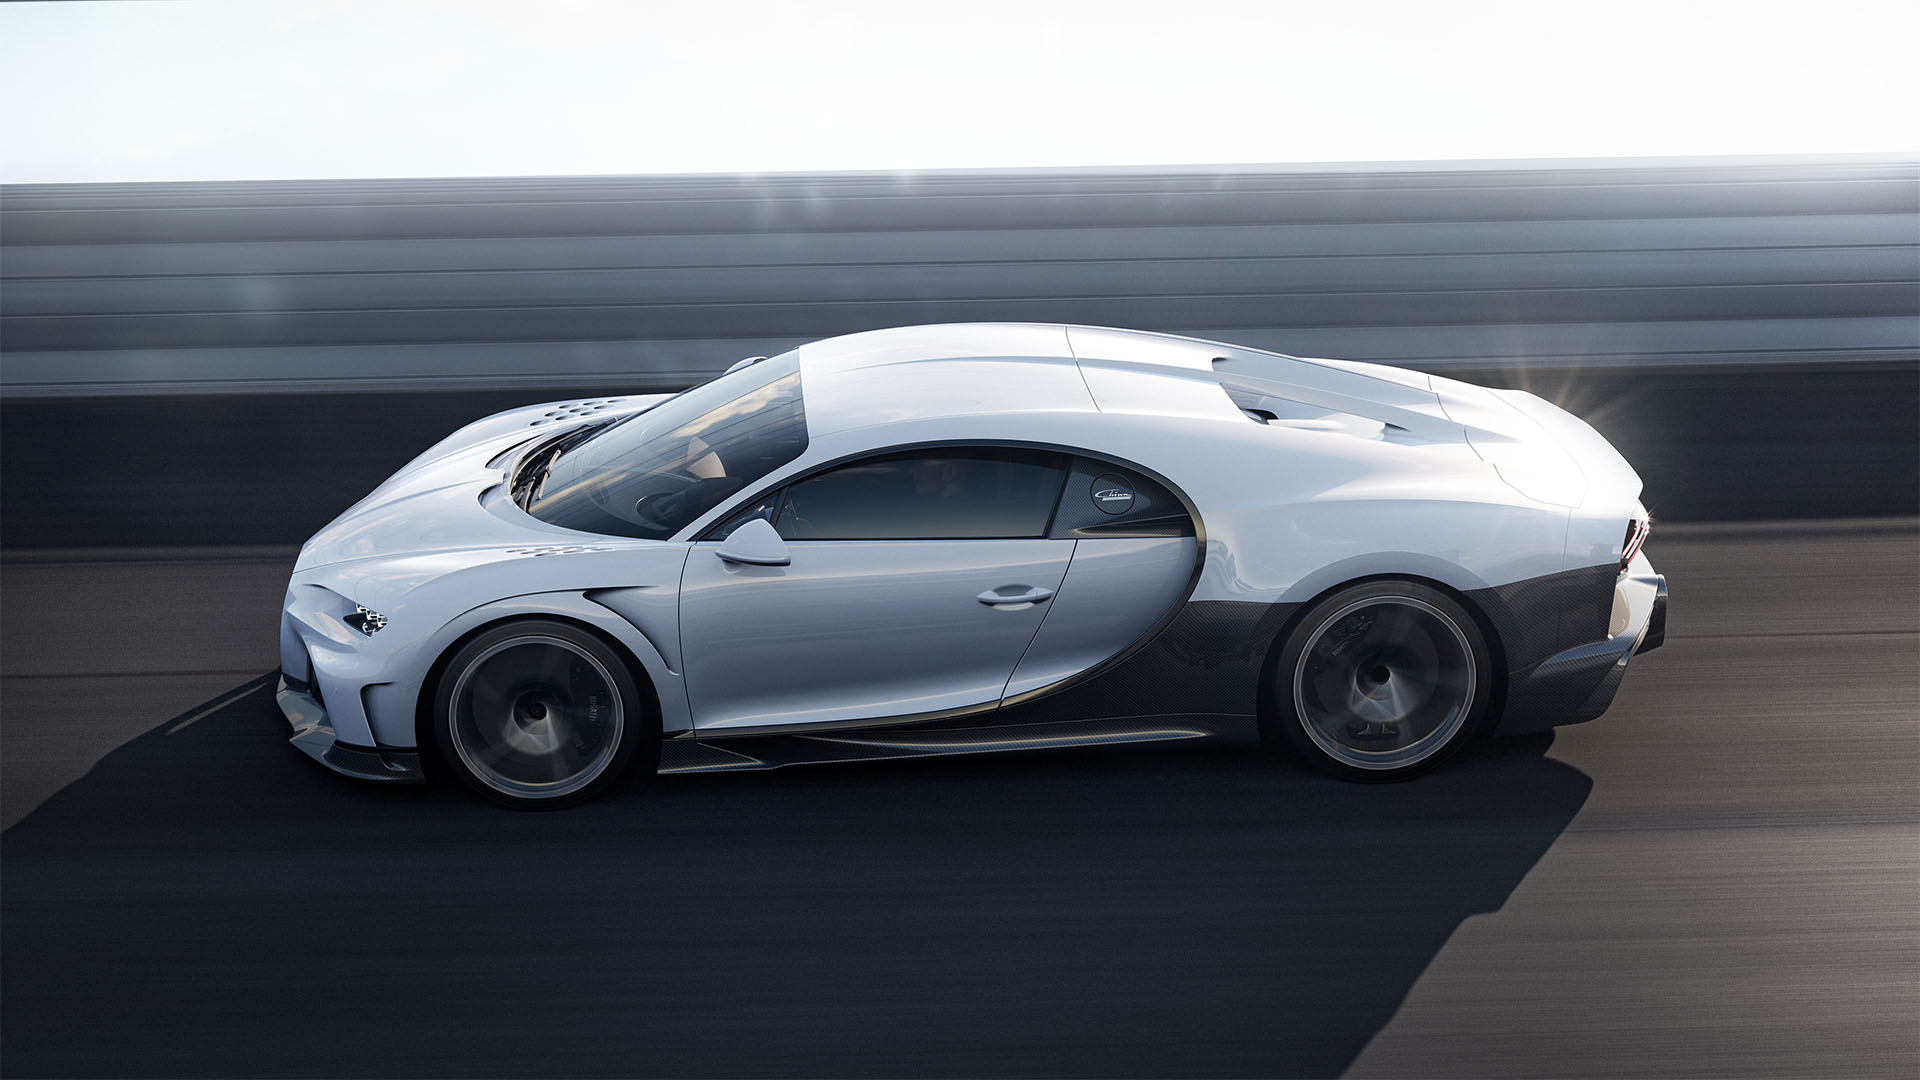 Three Bugatti Chiron Super Sport 300+ Models Were Just Delivered